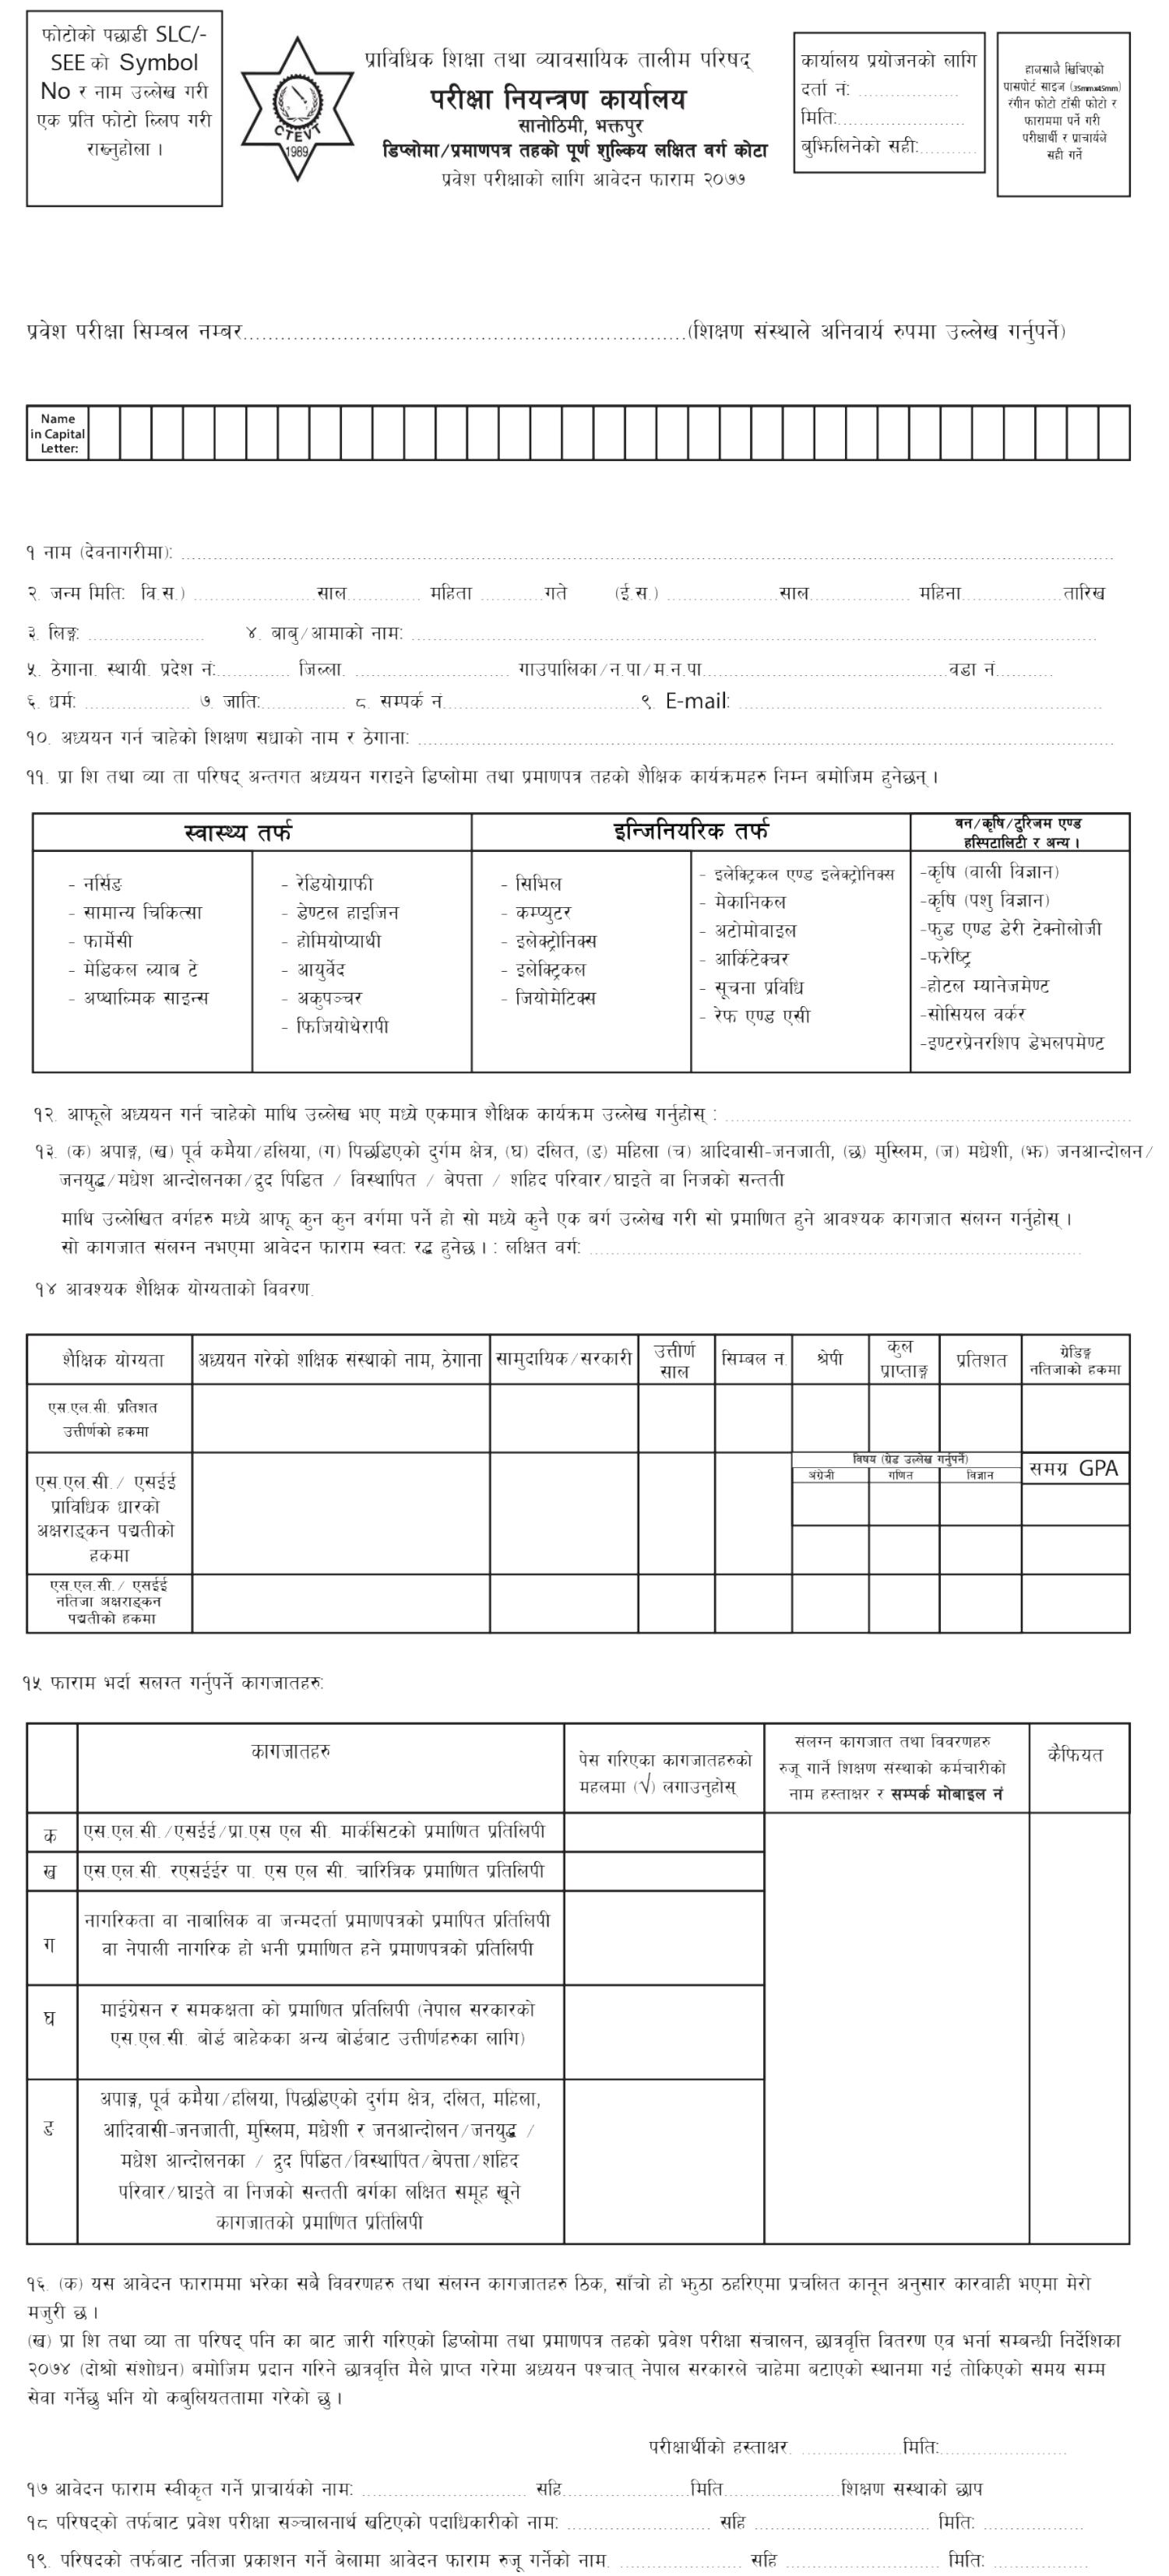 esic form 7b pdf free download